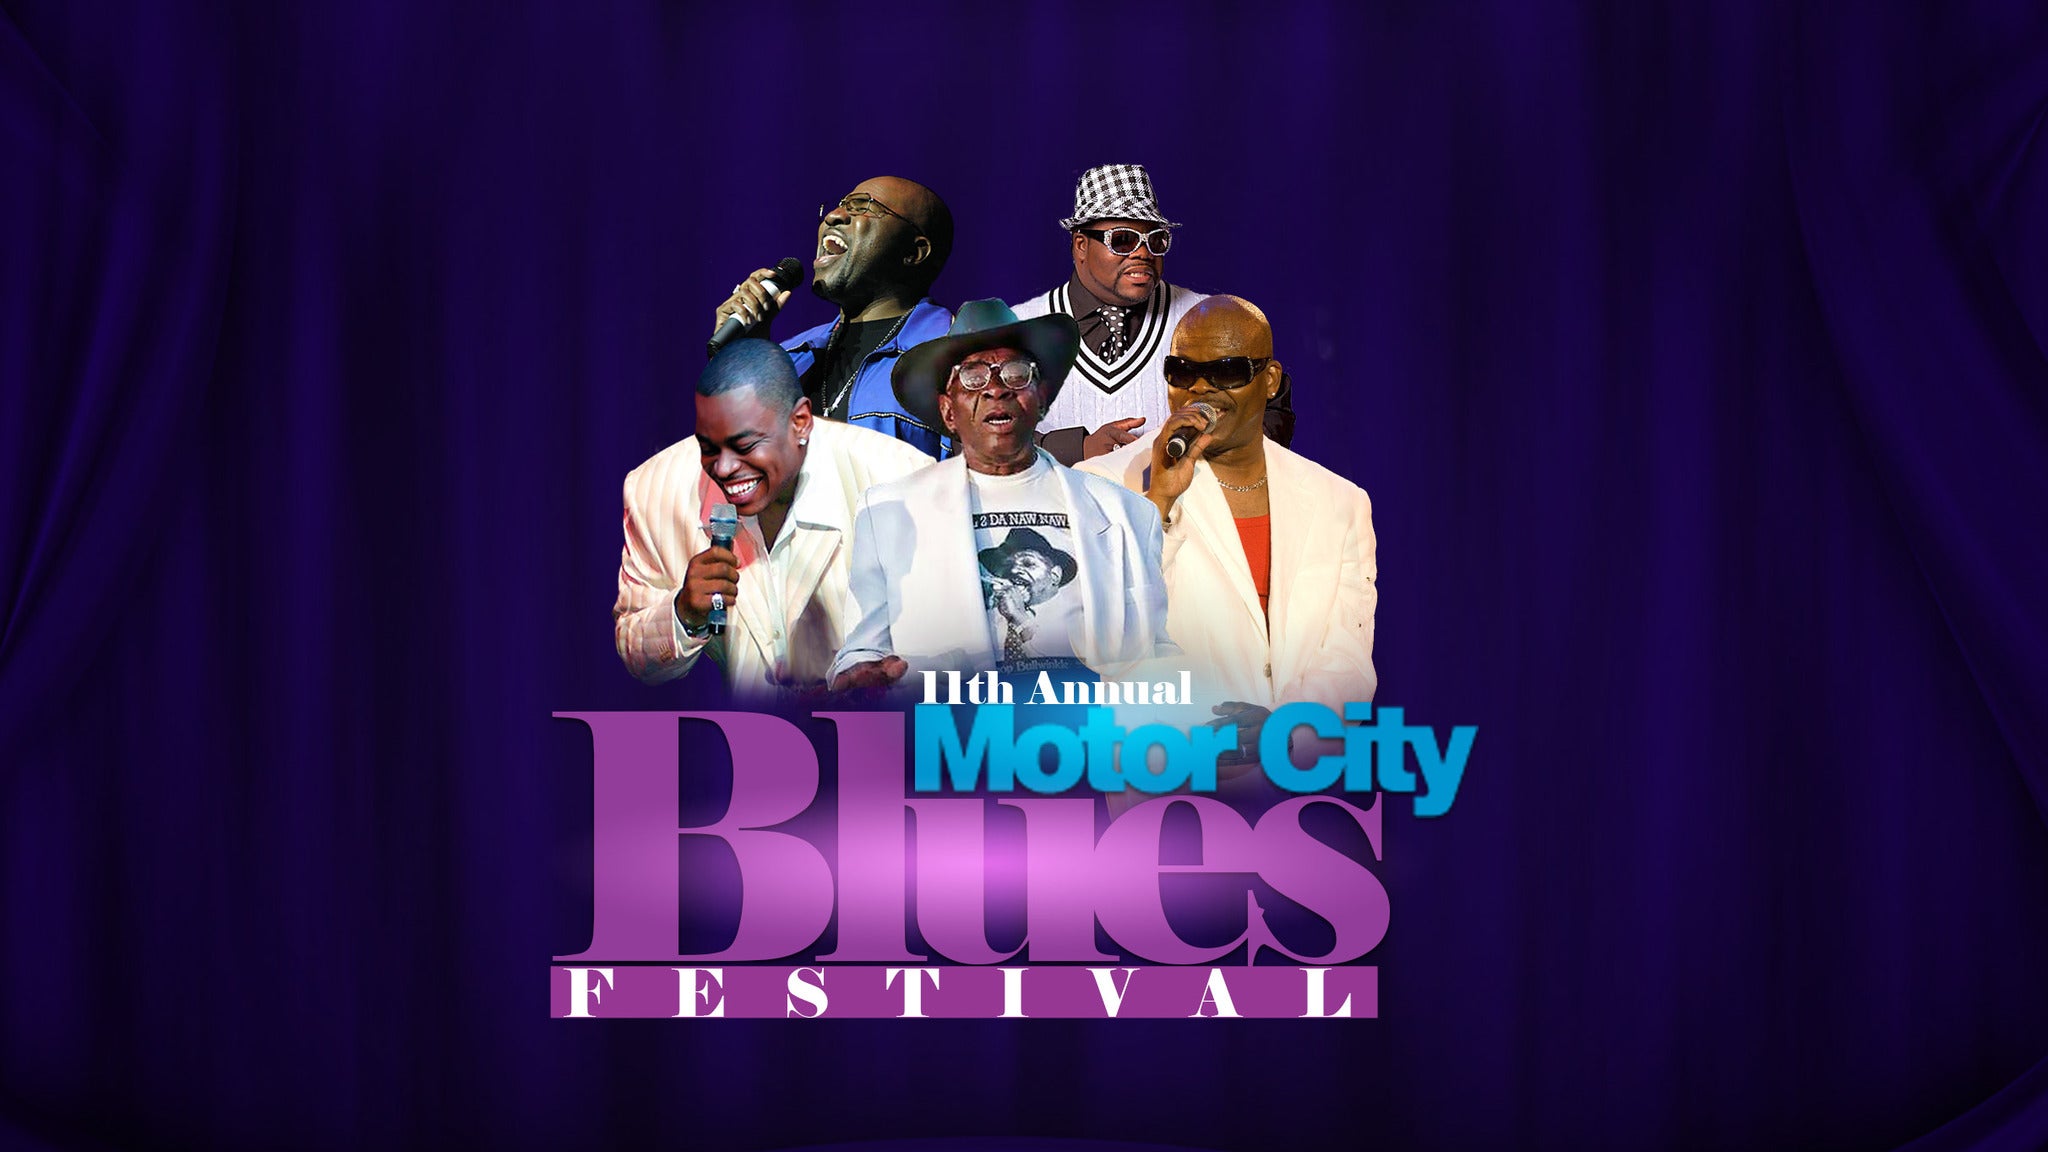 silo city blues festival